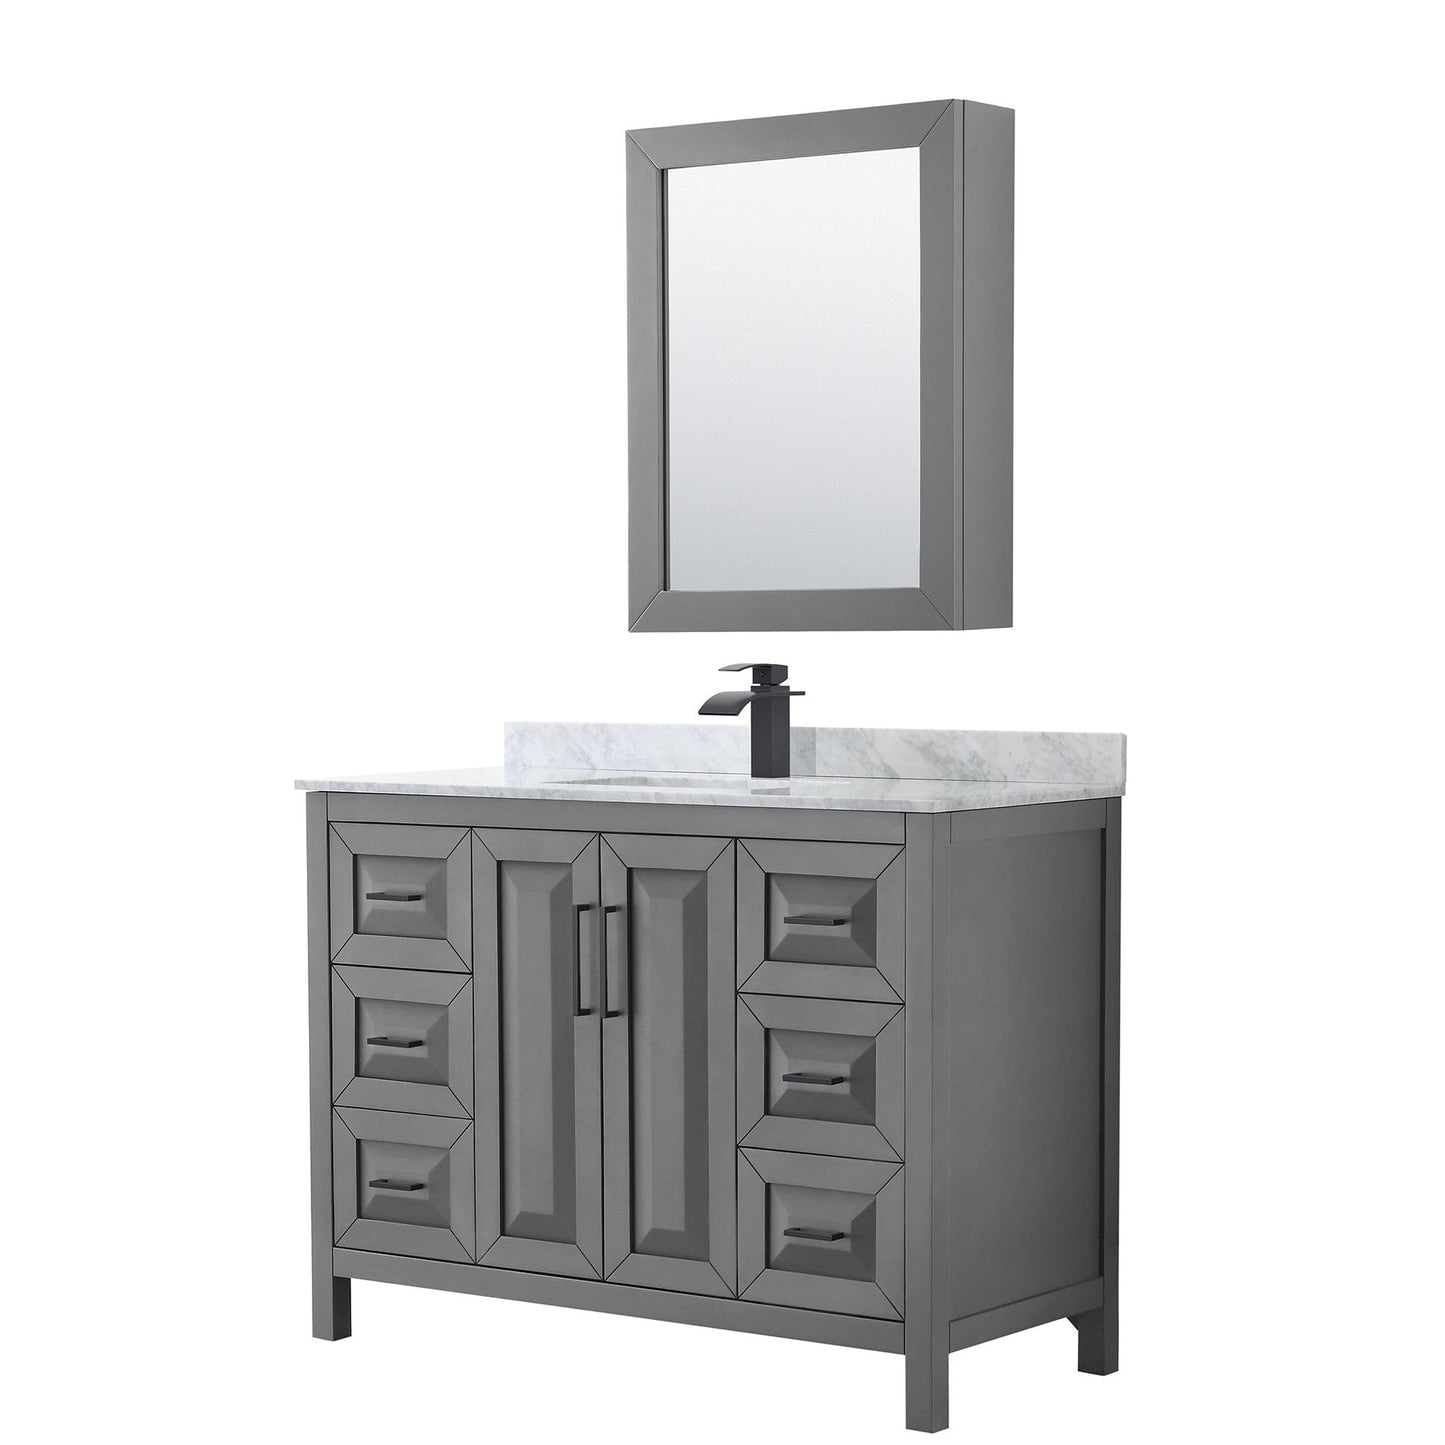 Daria 48" Single Bathroom Vanity in Dark Gray, White Carrara Marble Countertop, Undermount Square Sink, Matte Black Trim, Medicine Cabinet